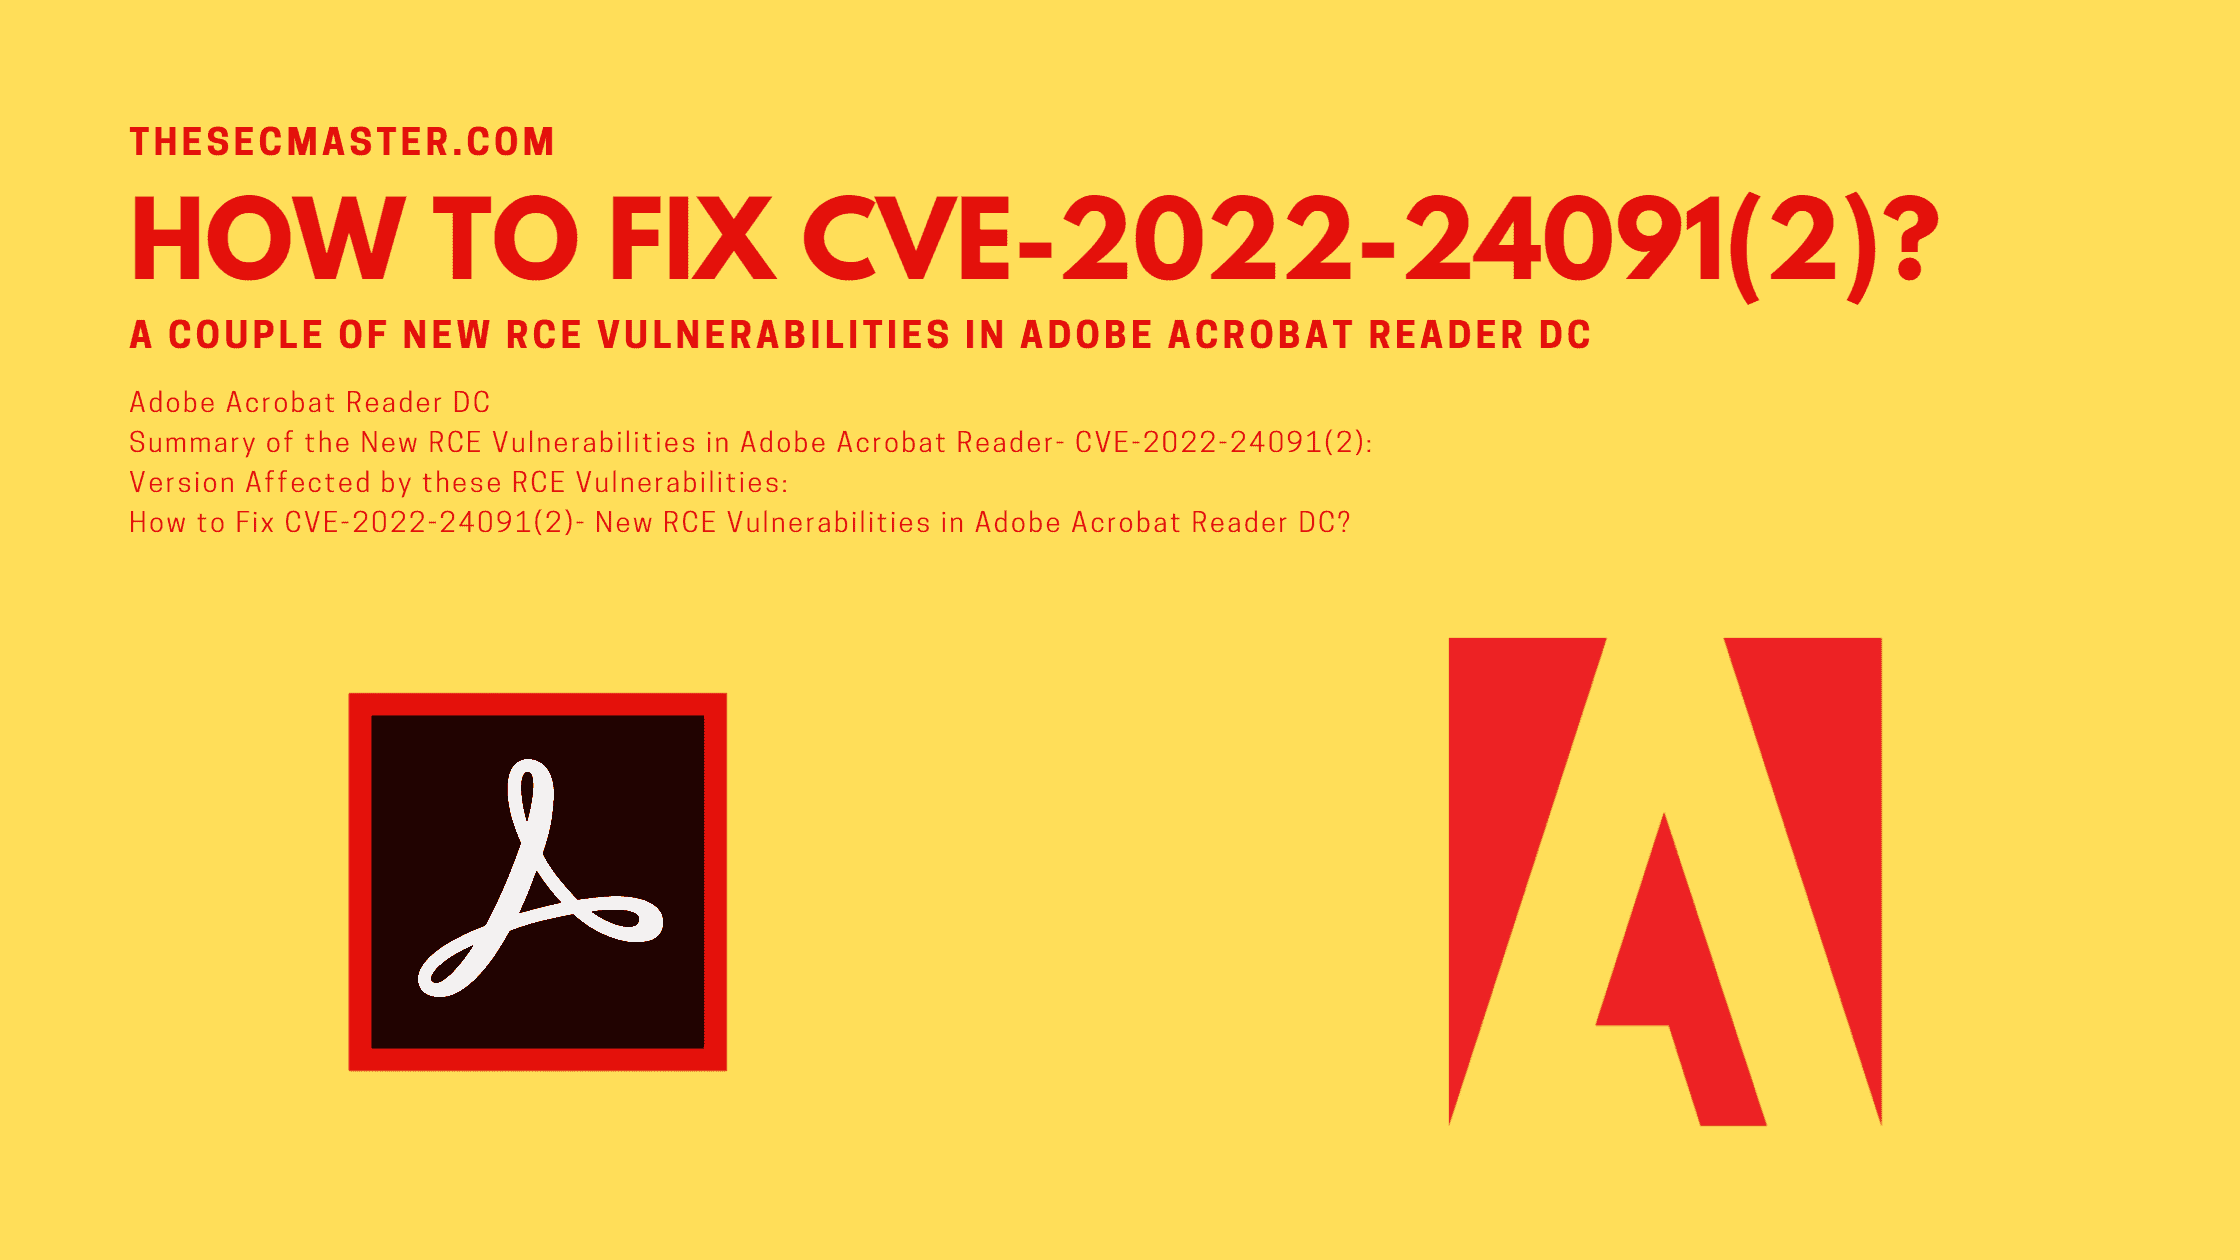 How To Fix Cve 2022 240912 New Rce Vulnerabilities In Adobe Acrobat Reader Dc